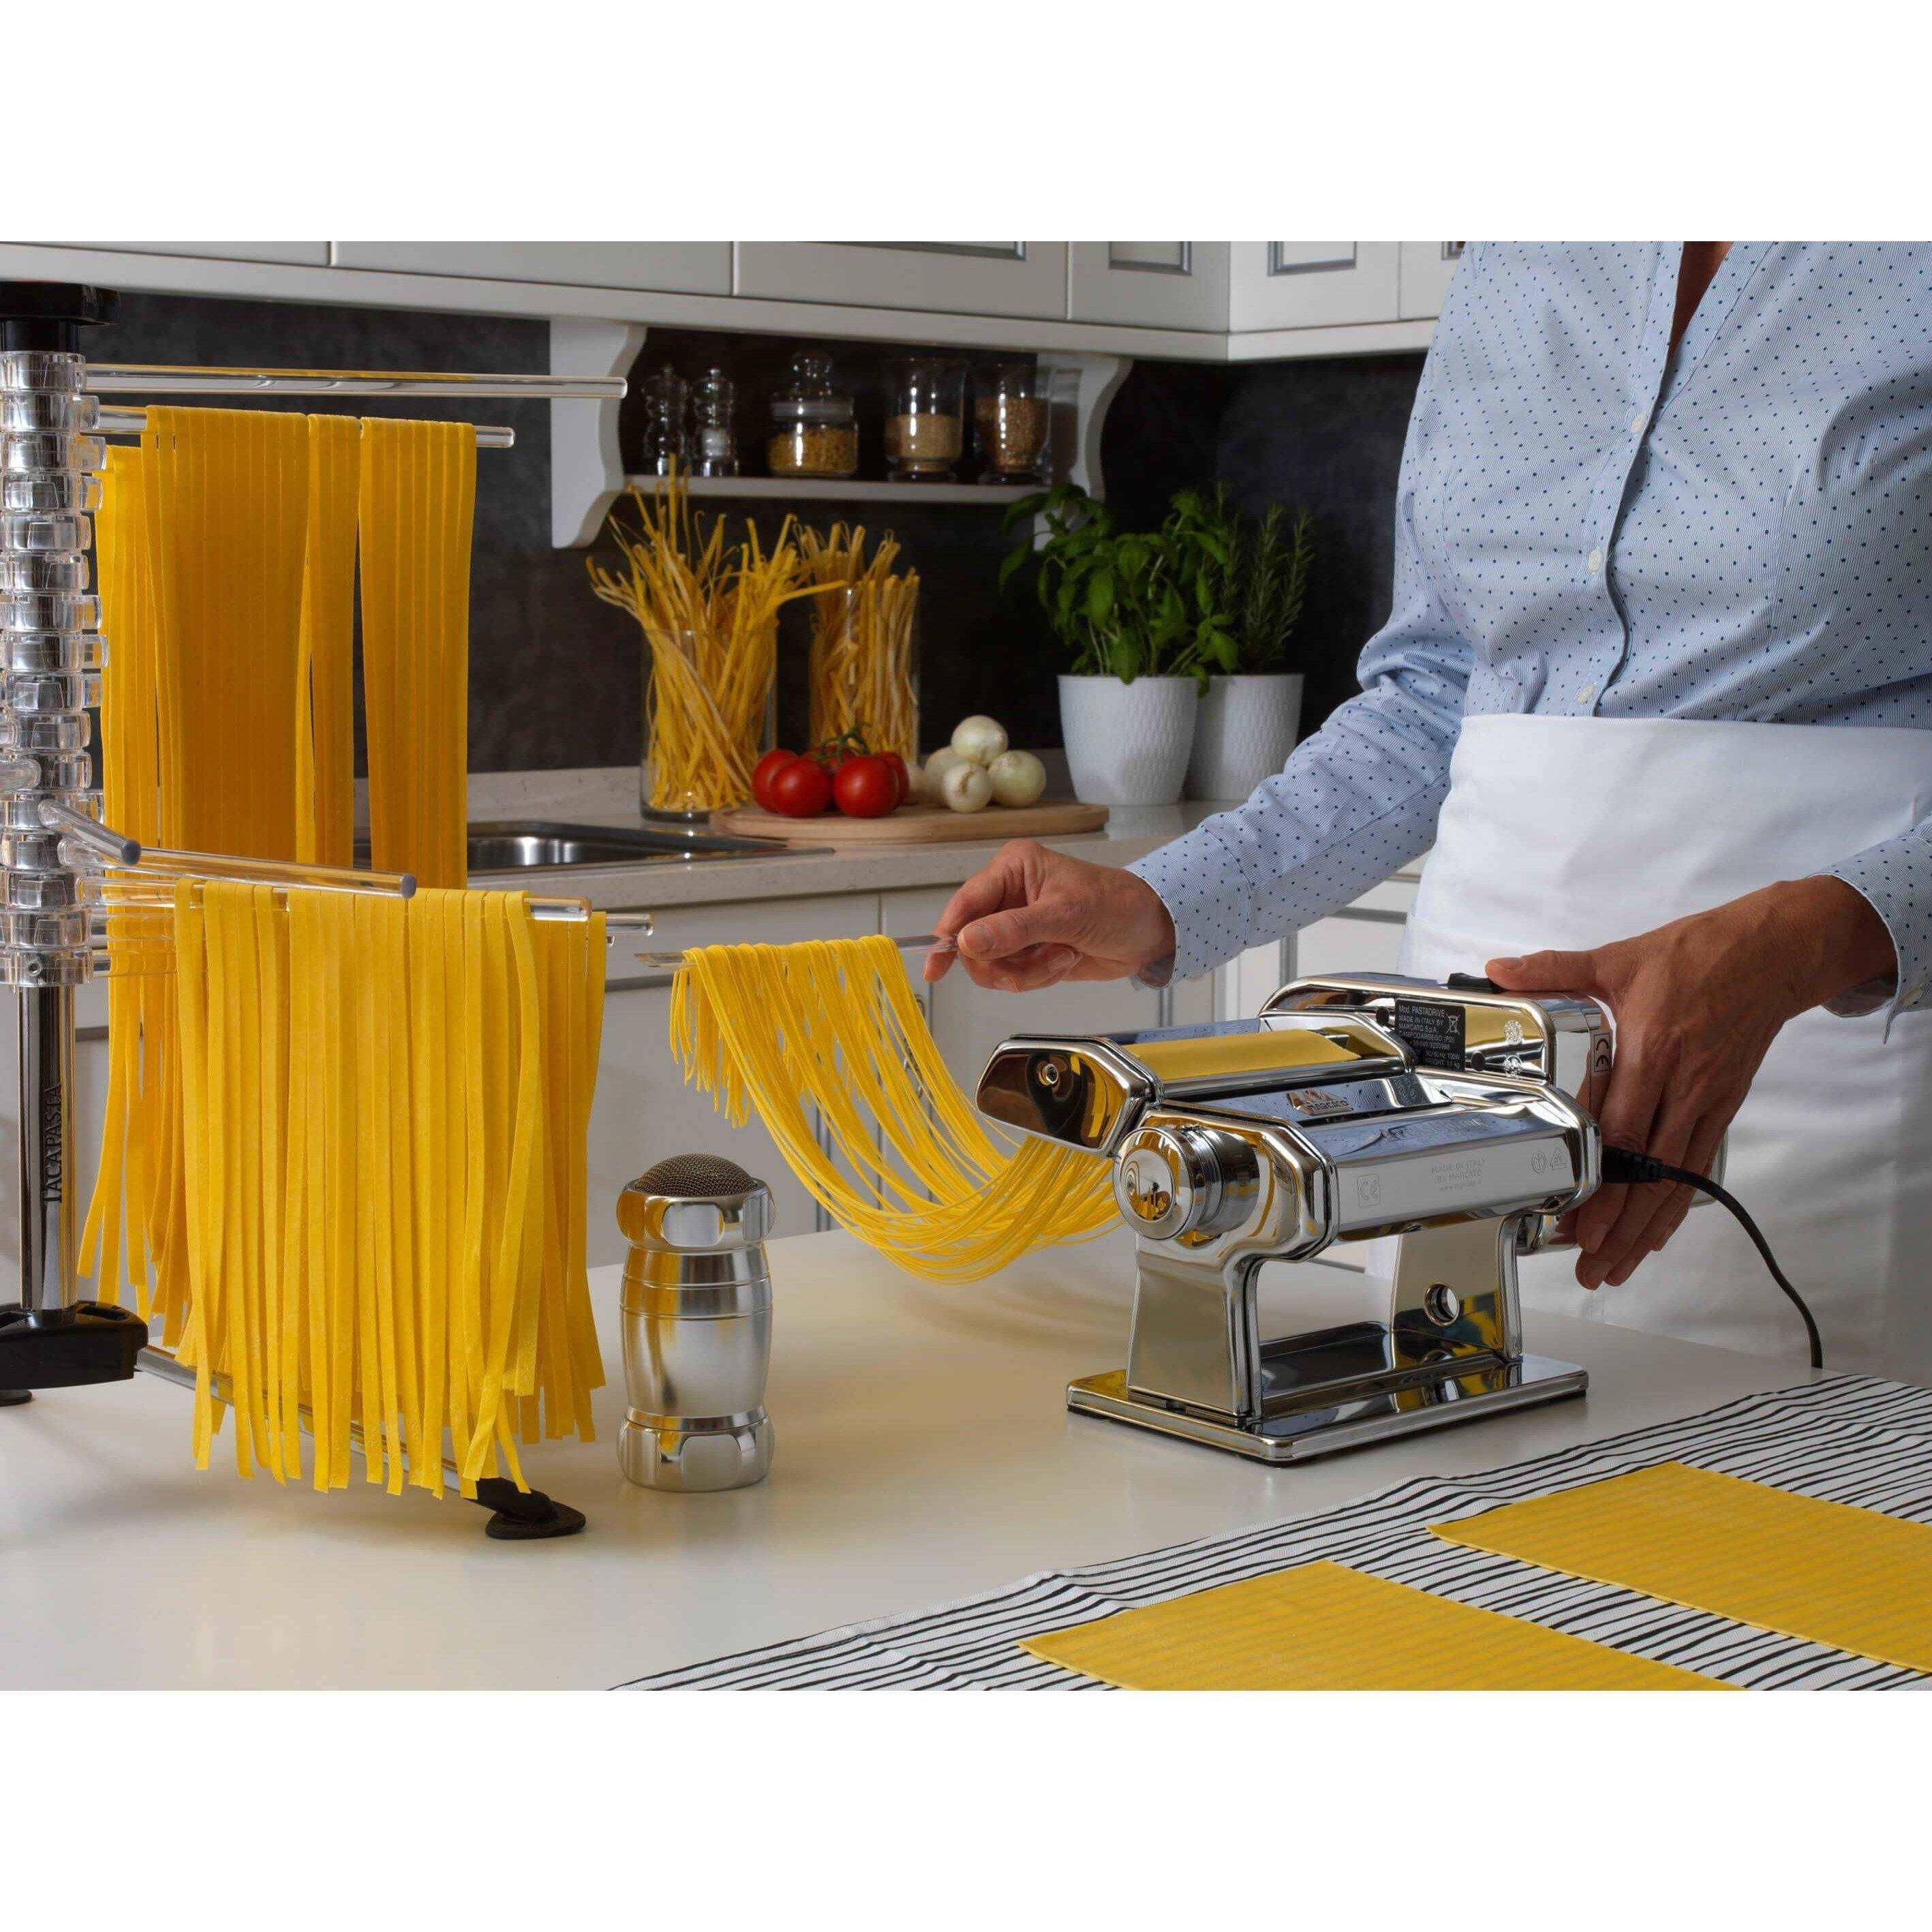 Marcato Atlasmotor Pasta Machine - Pasta Kitchen (tutto pasta)